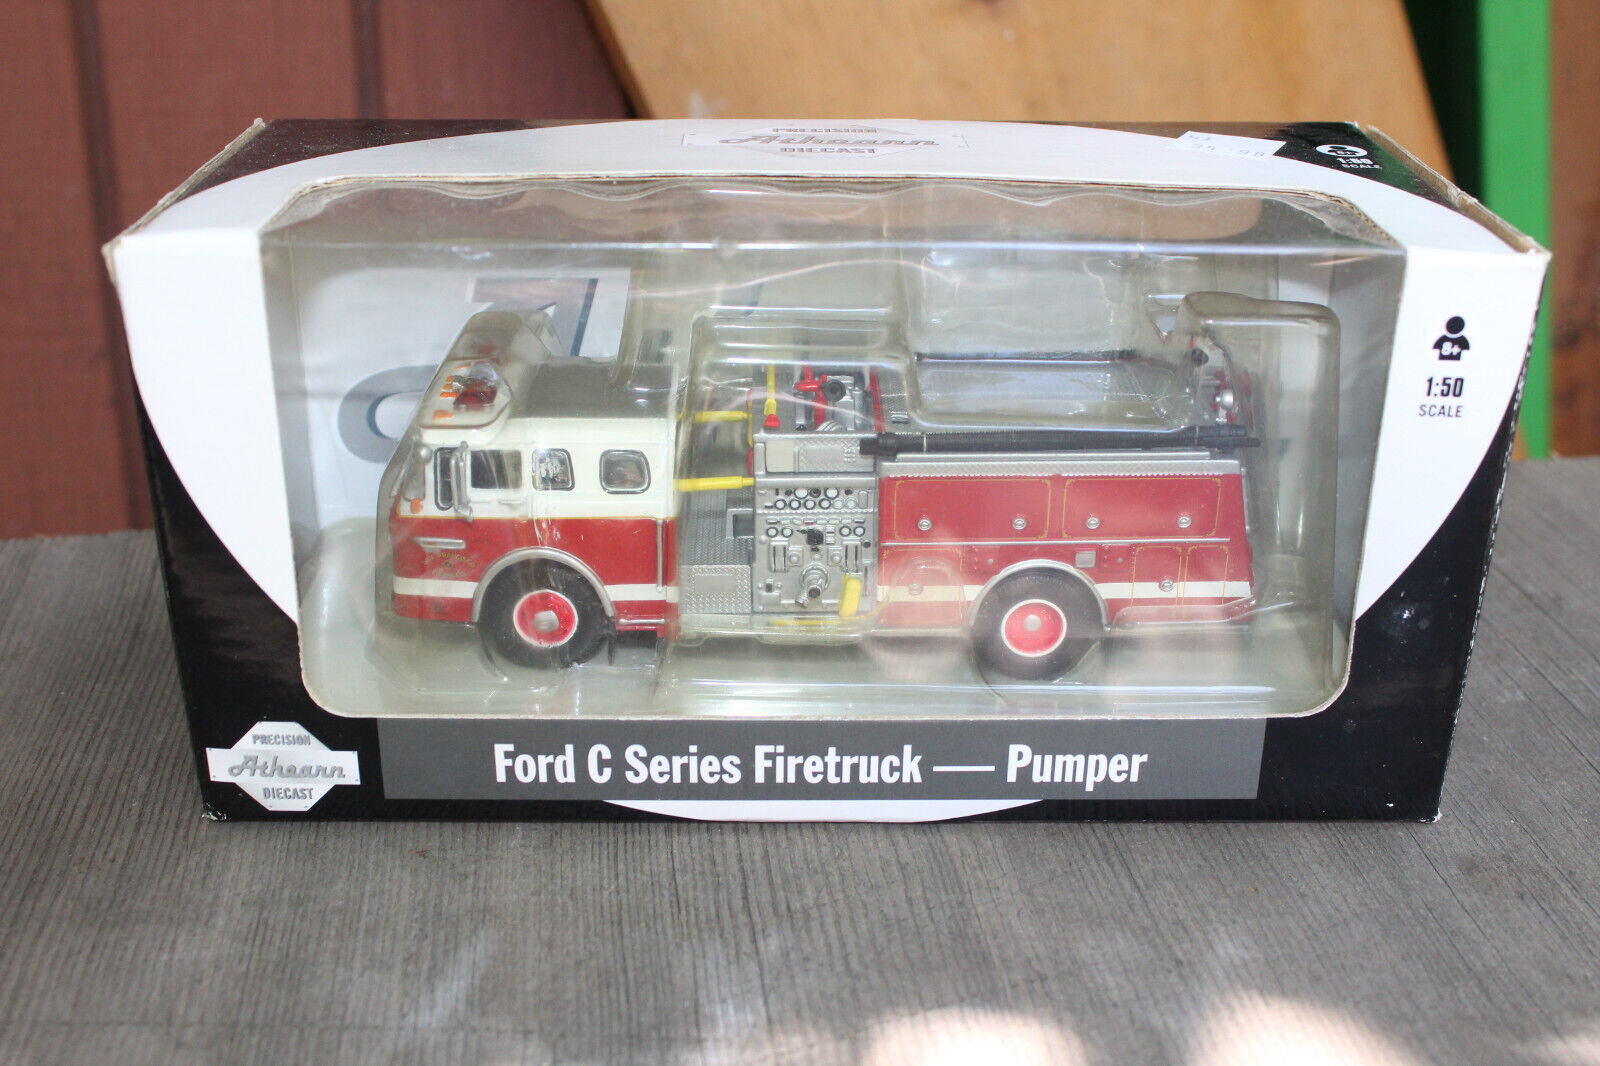 ATHEARN 1:50 San Francisco Pumper Fire Truck Ford C Series Firetruck #90892 LB